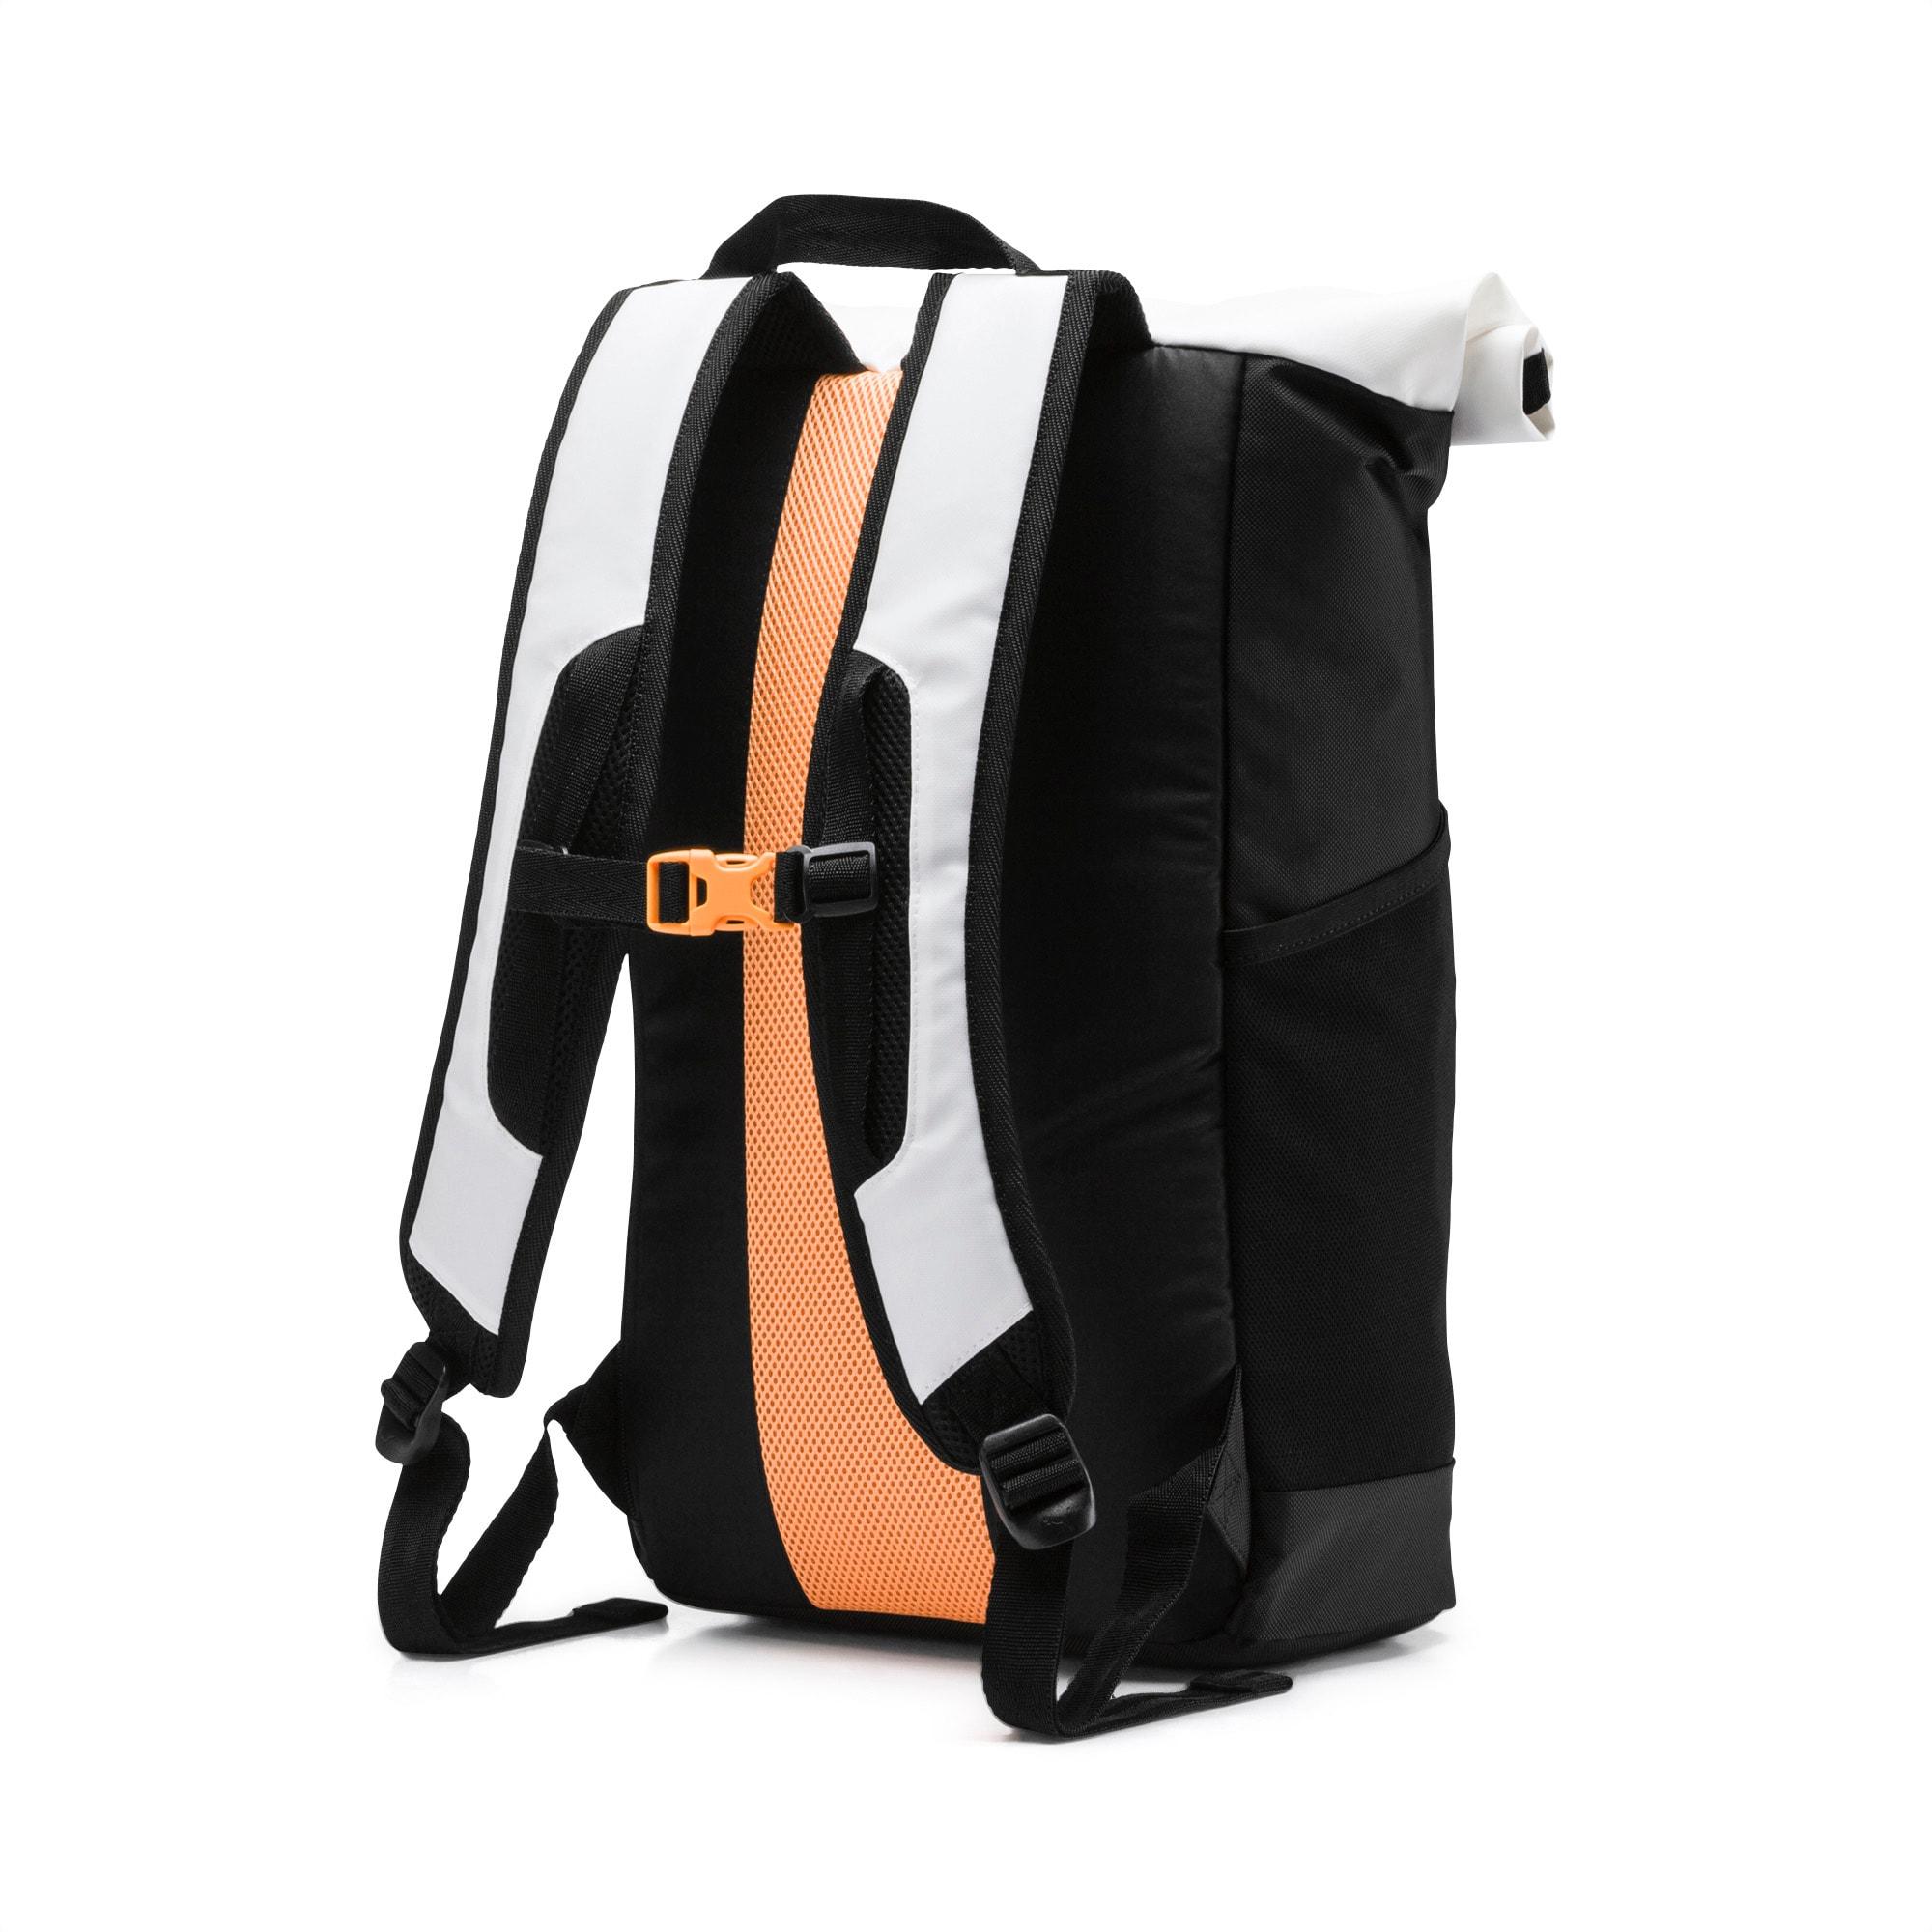 puma roll top backpack,OFF 67%,welborntx.com